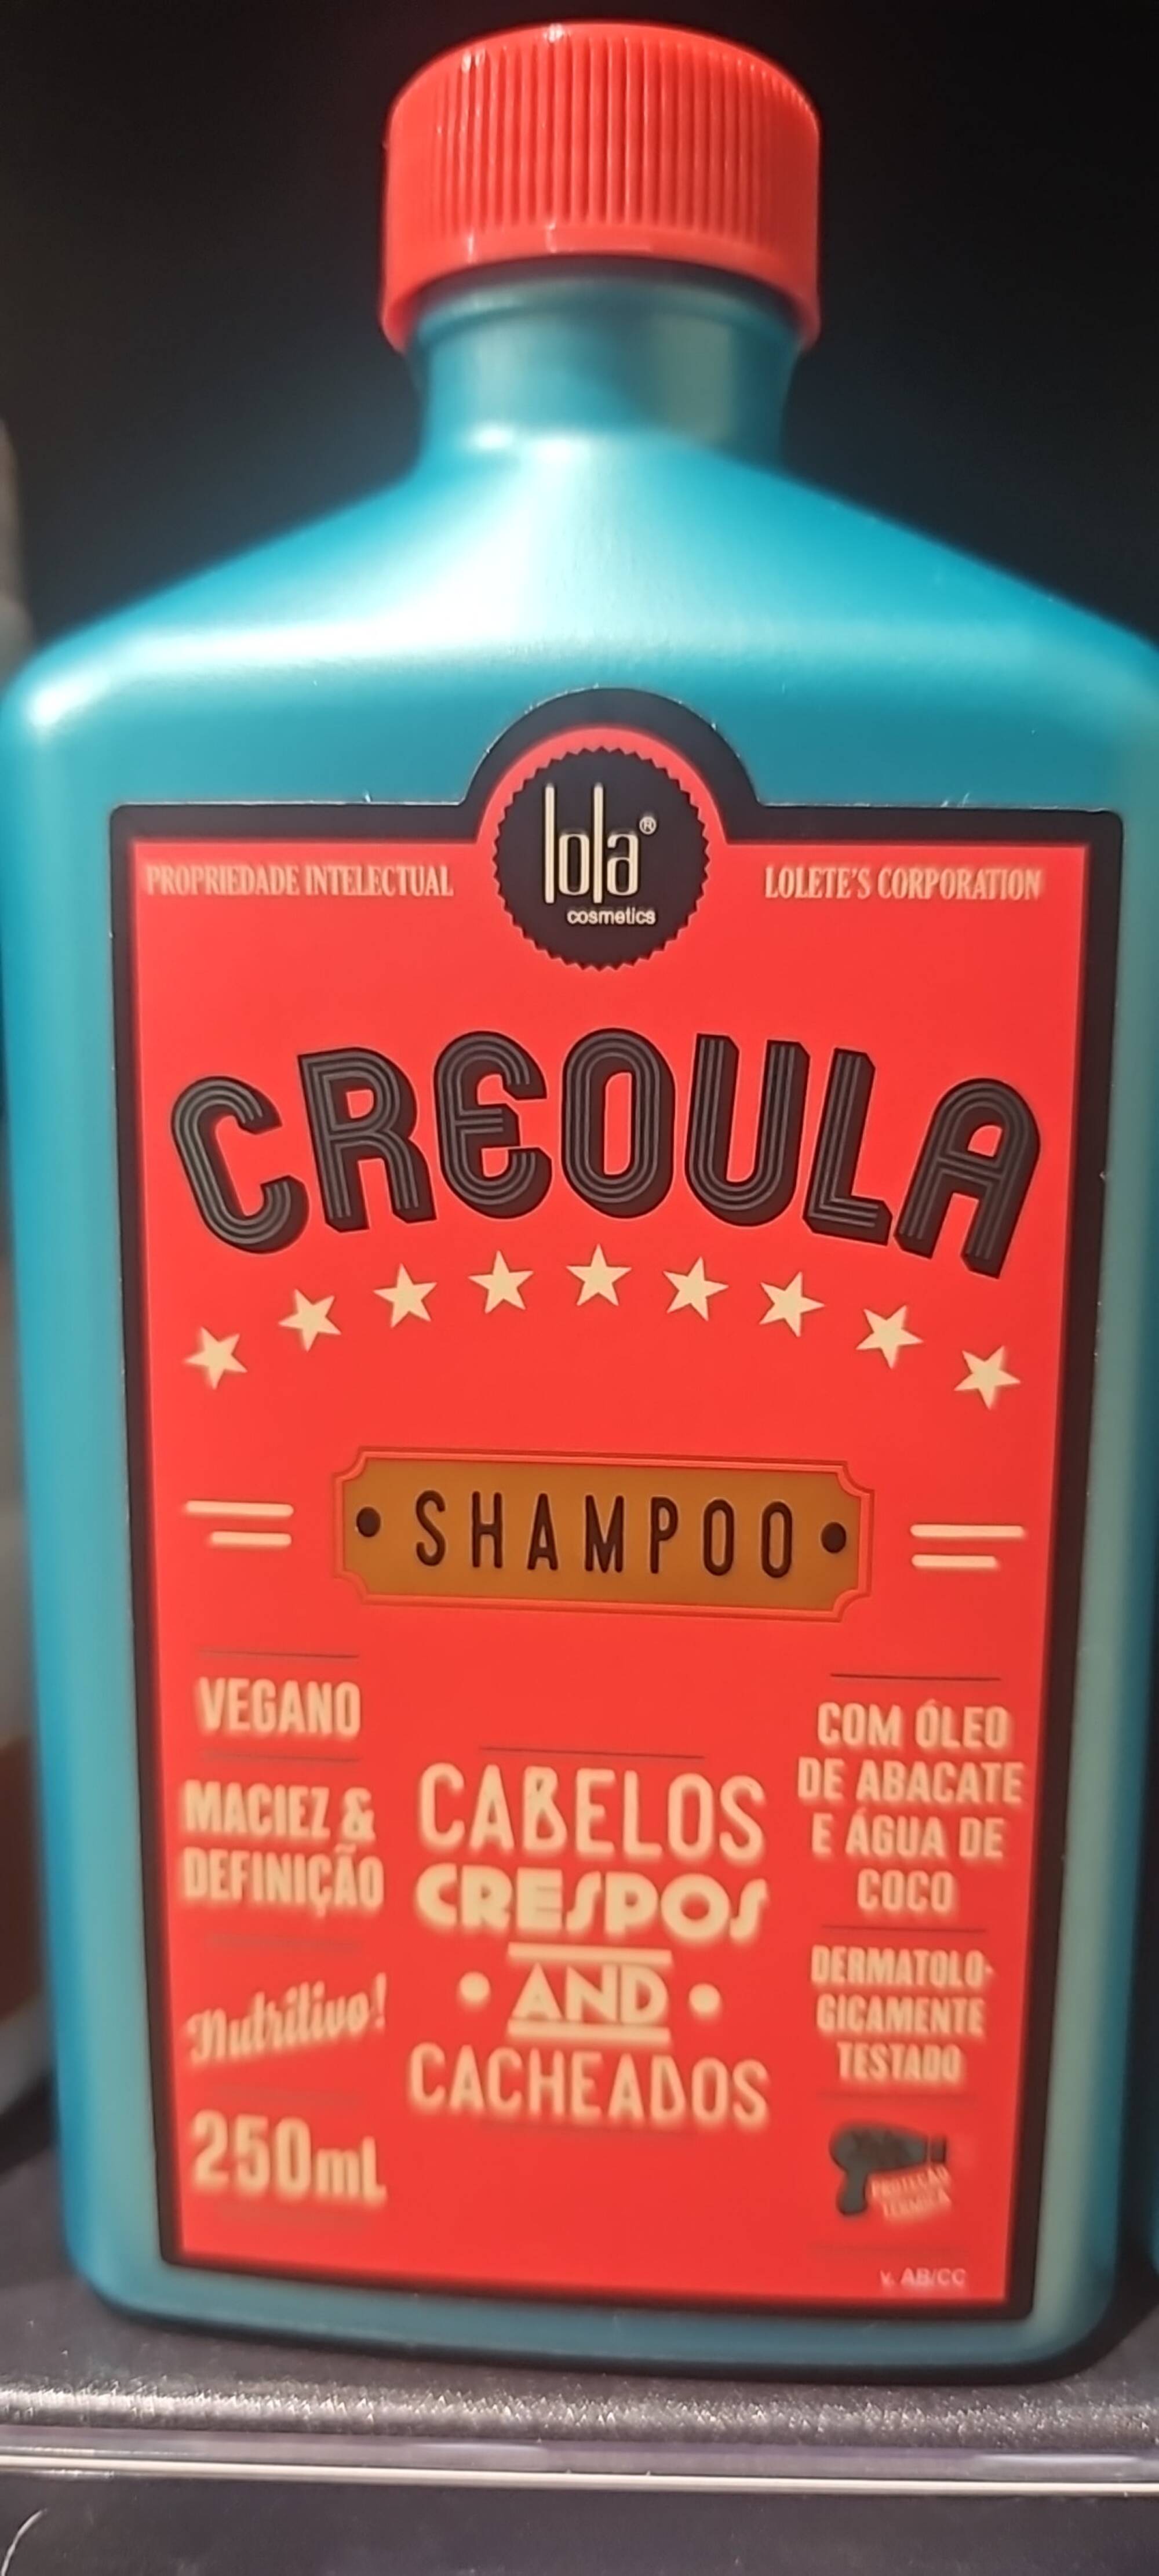 LOLA COSMETICS - Creoula shampoo